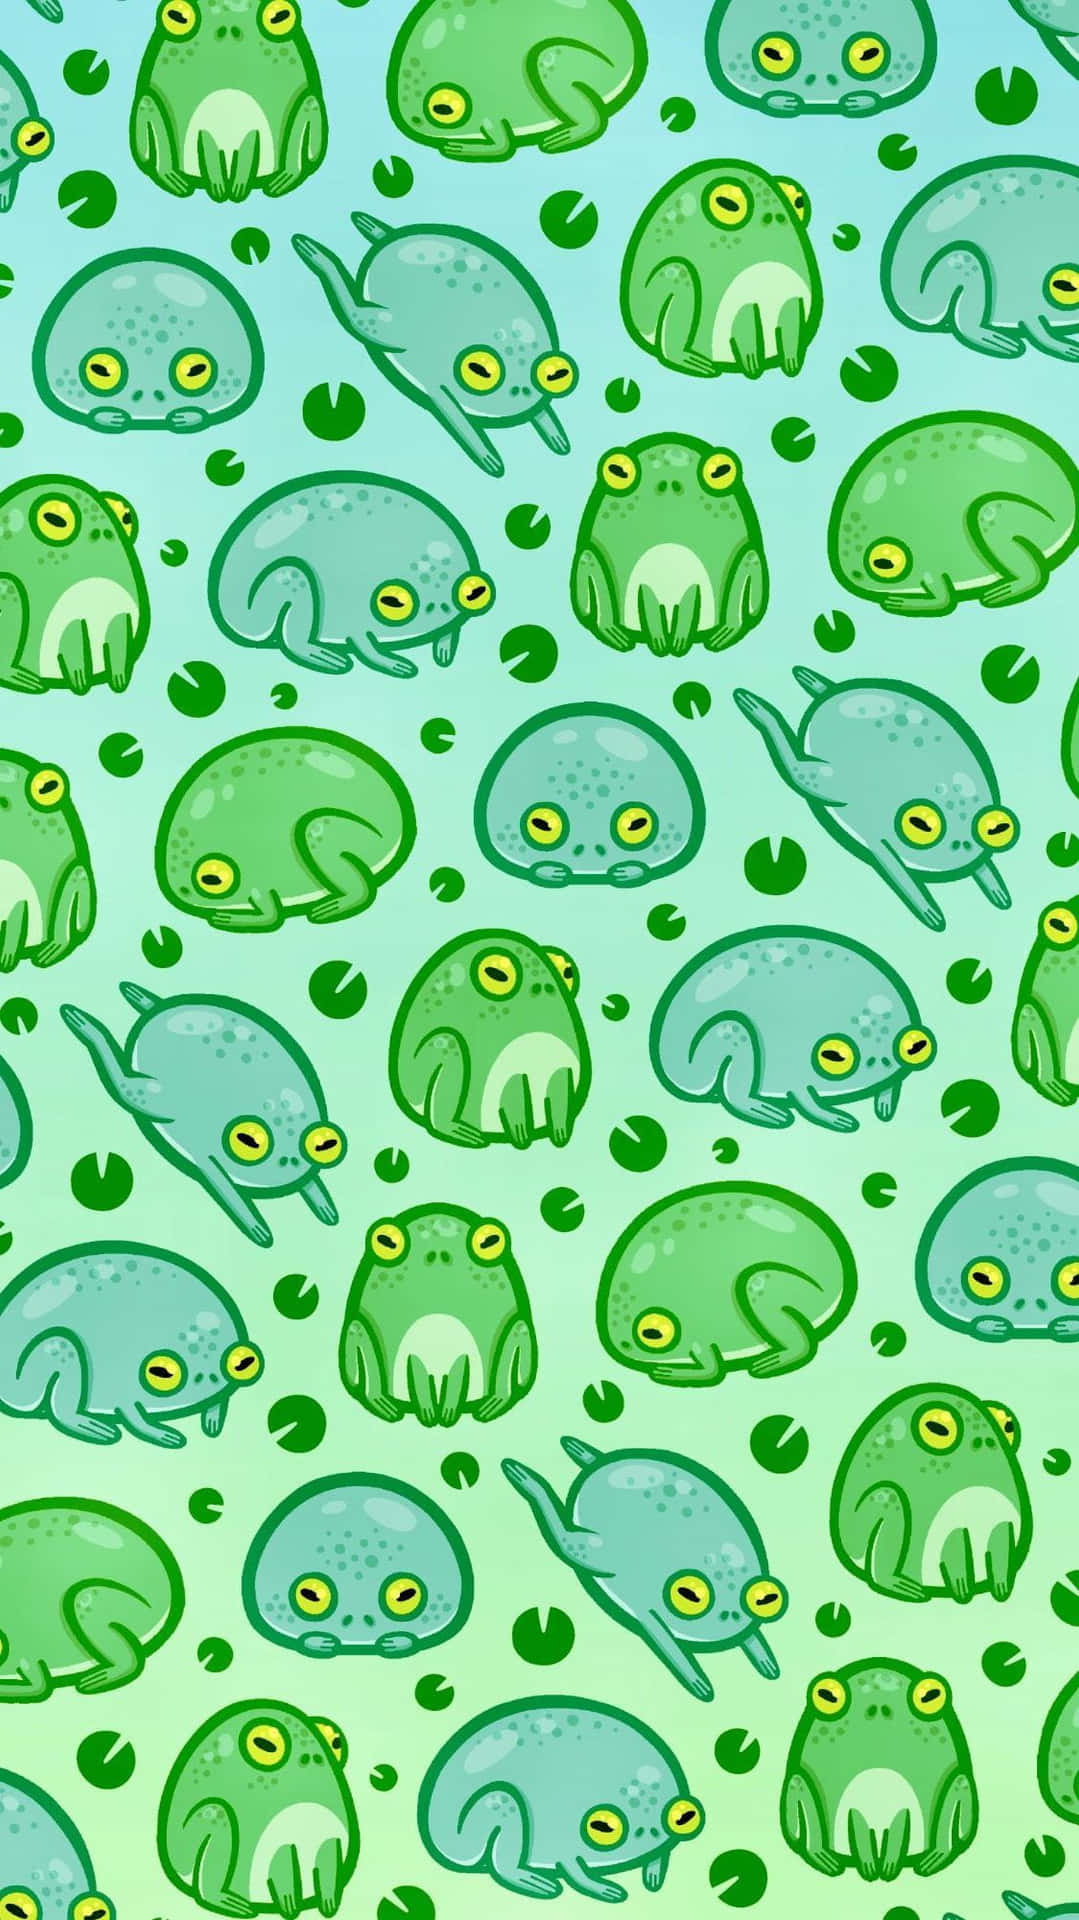 Vibrant Aesthetic Frog in Nature Wallpaper